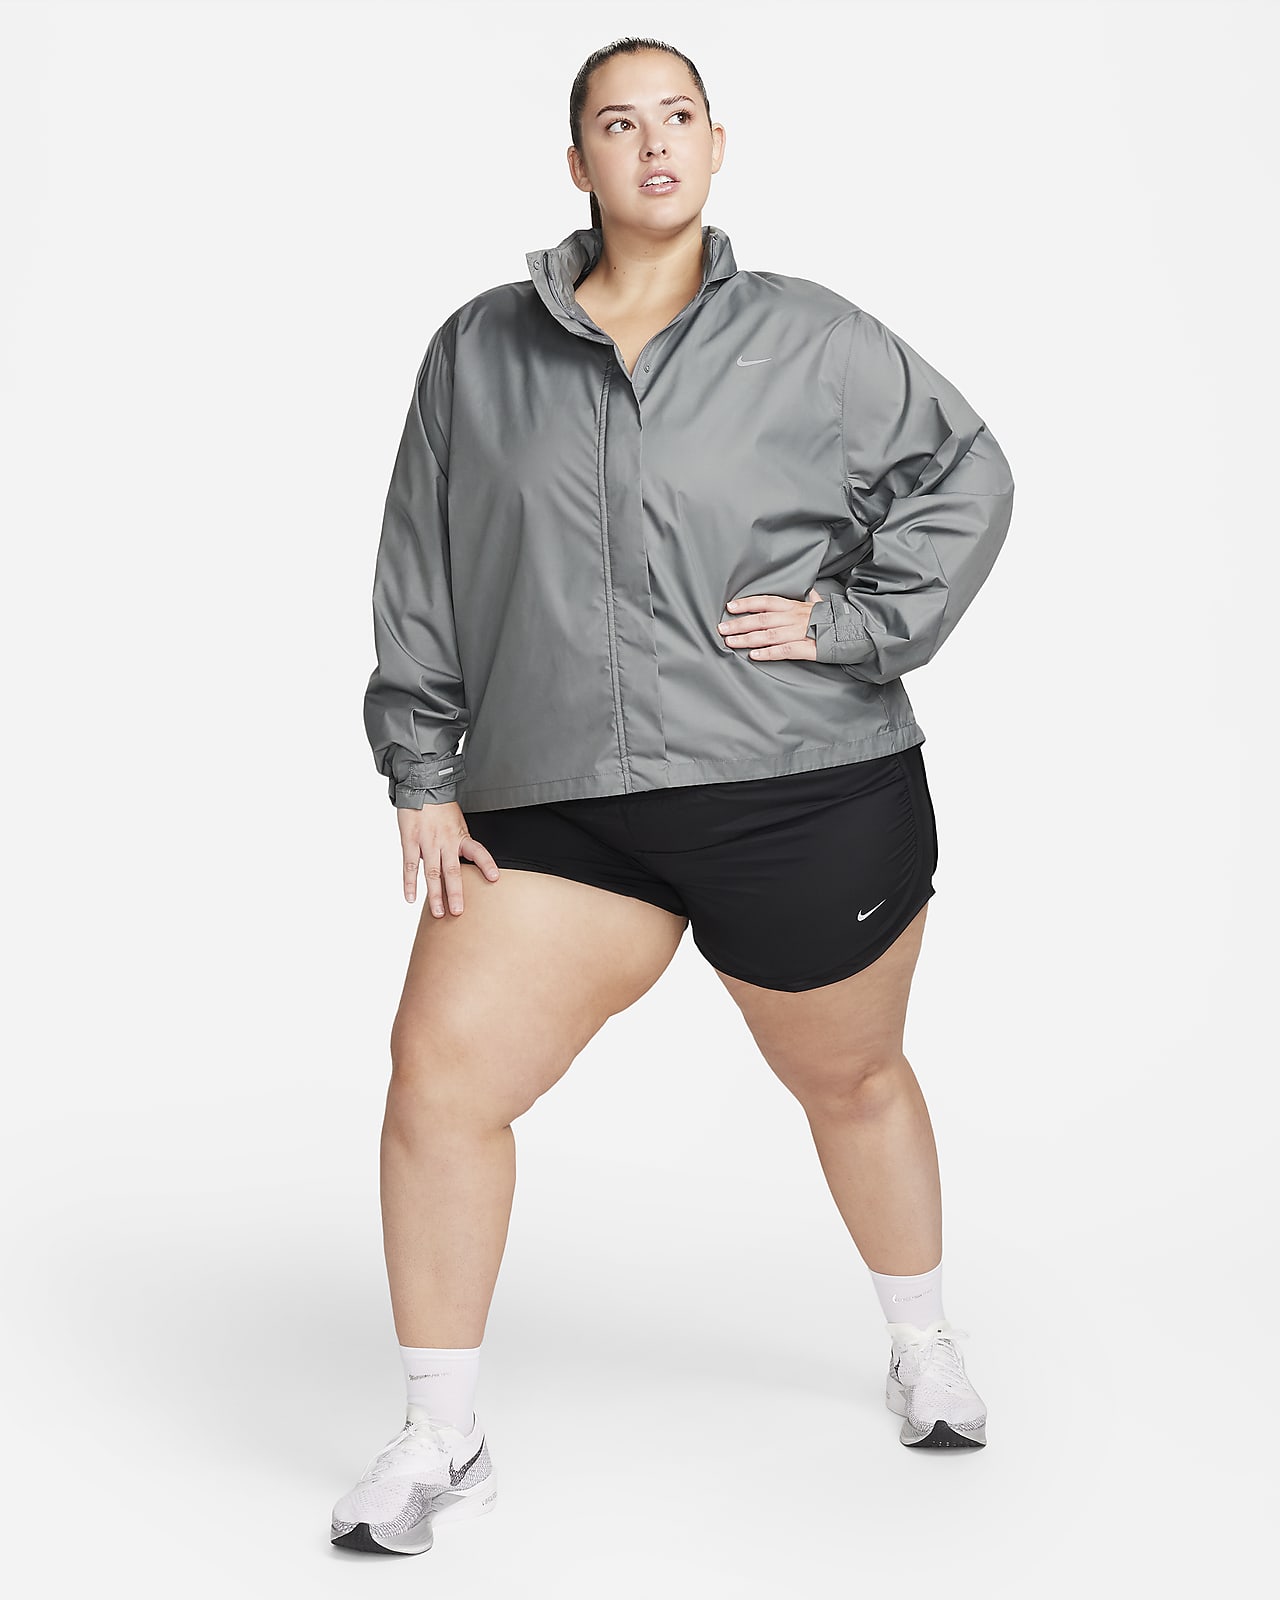 Women\'s Running Repel Nike Jacket (Plus Fast Size).